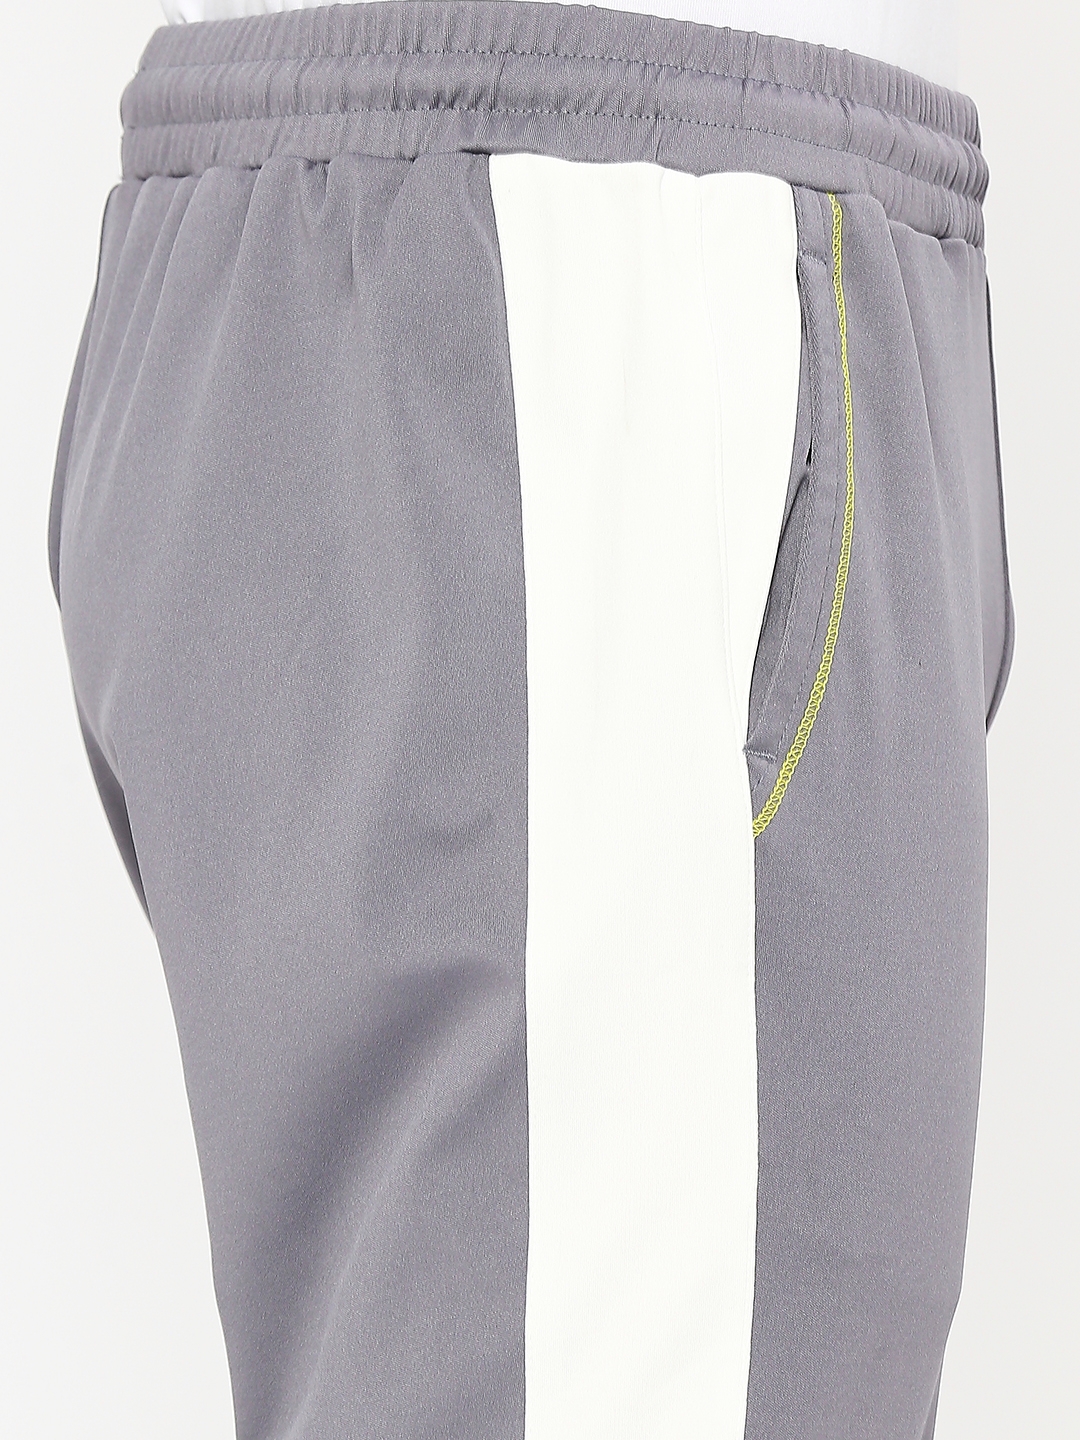 FITZ | Men's Slim Fit Grey Cotton Blend Casual Joogers 4